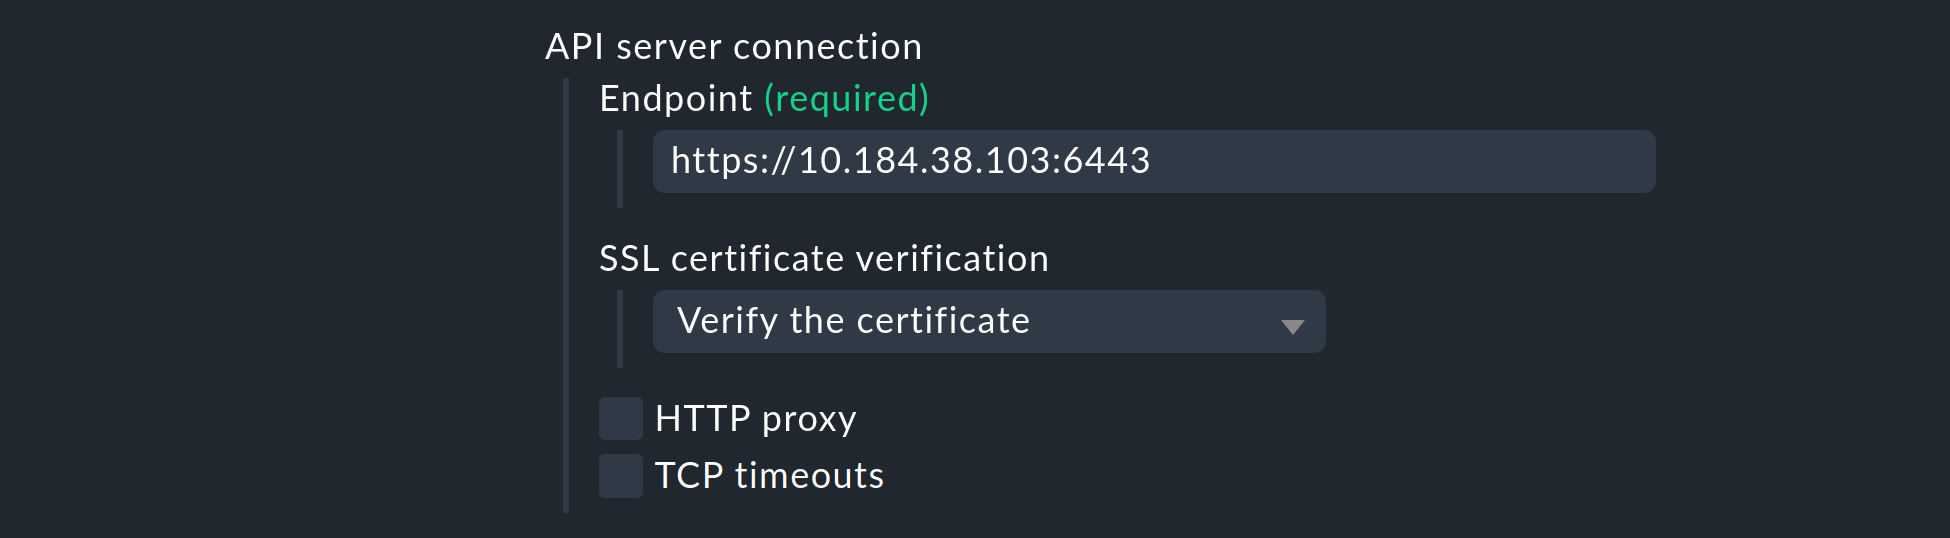 Exemplarische Angabe der API-Server Verbindung.